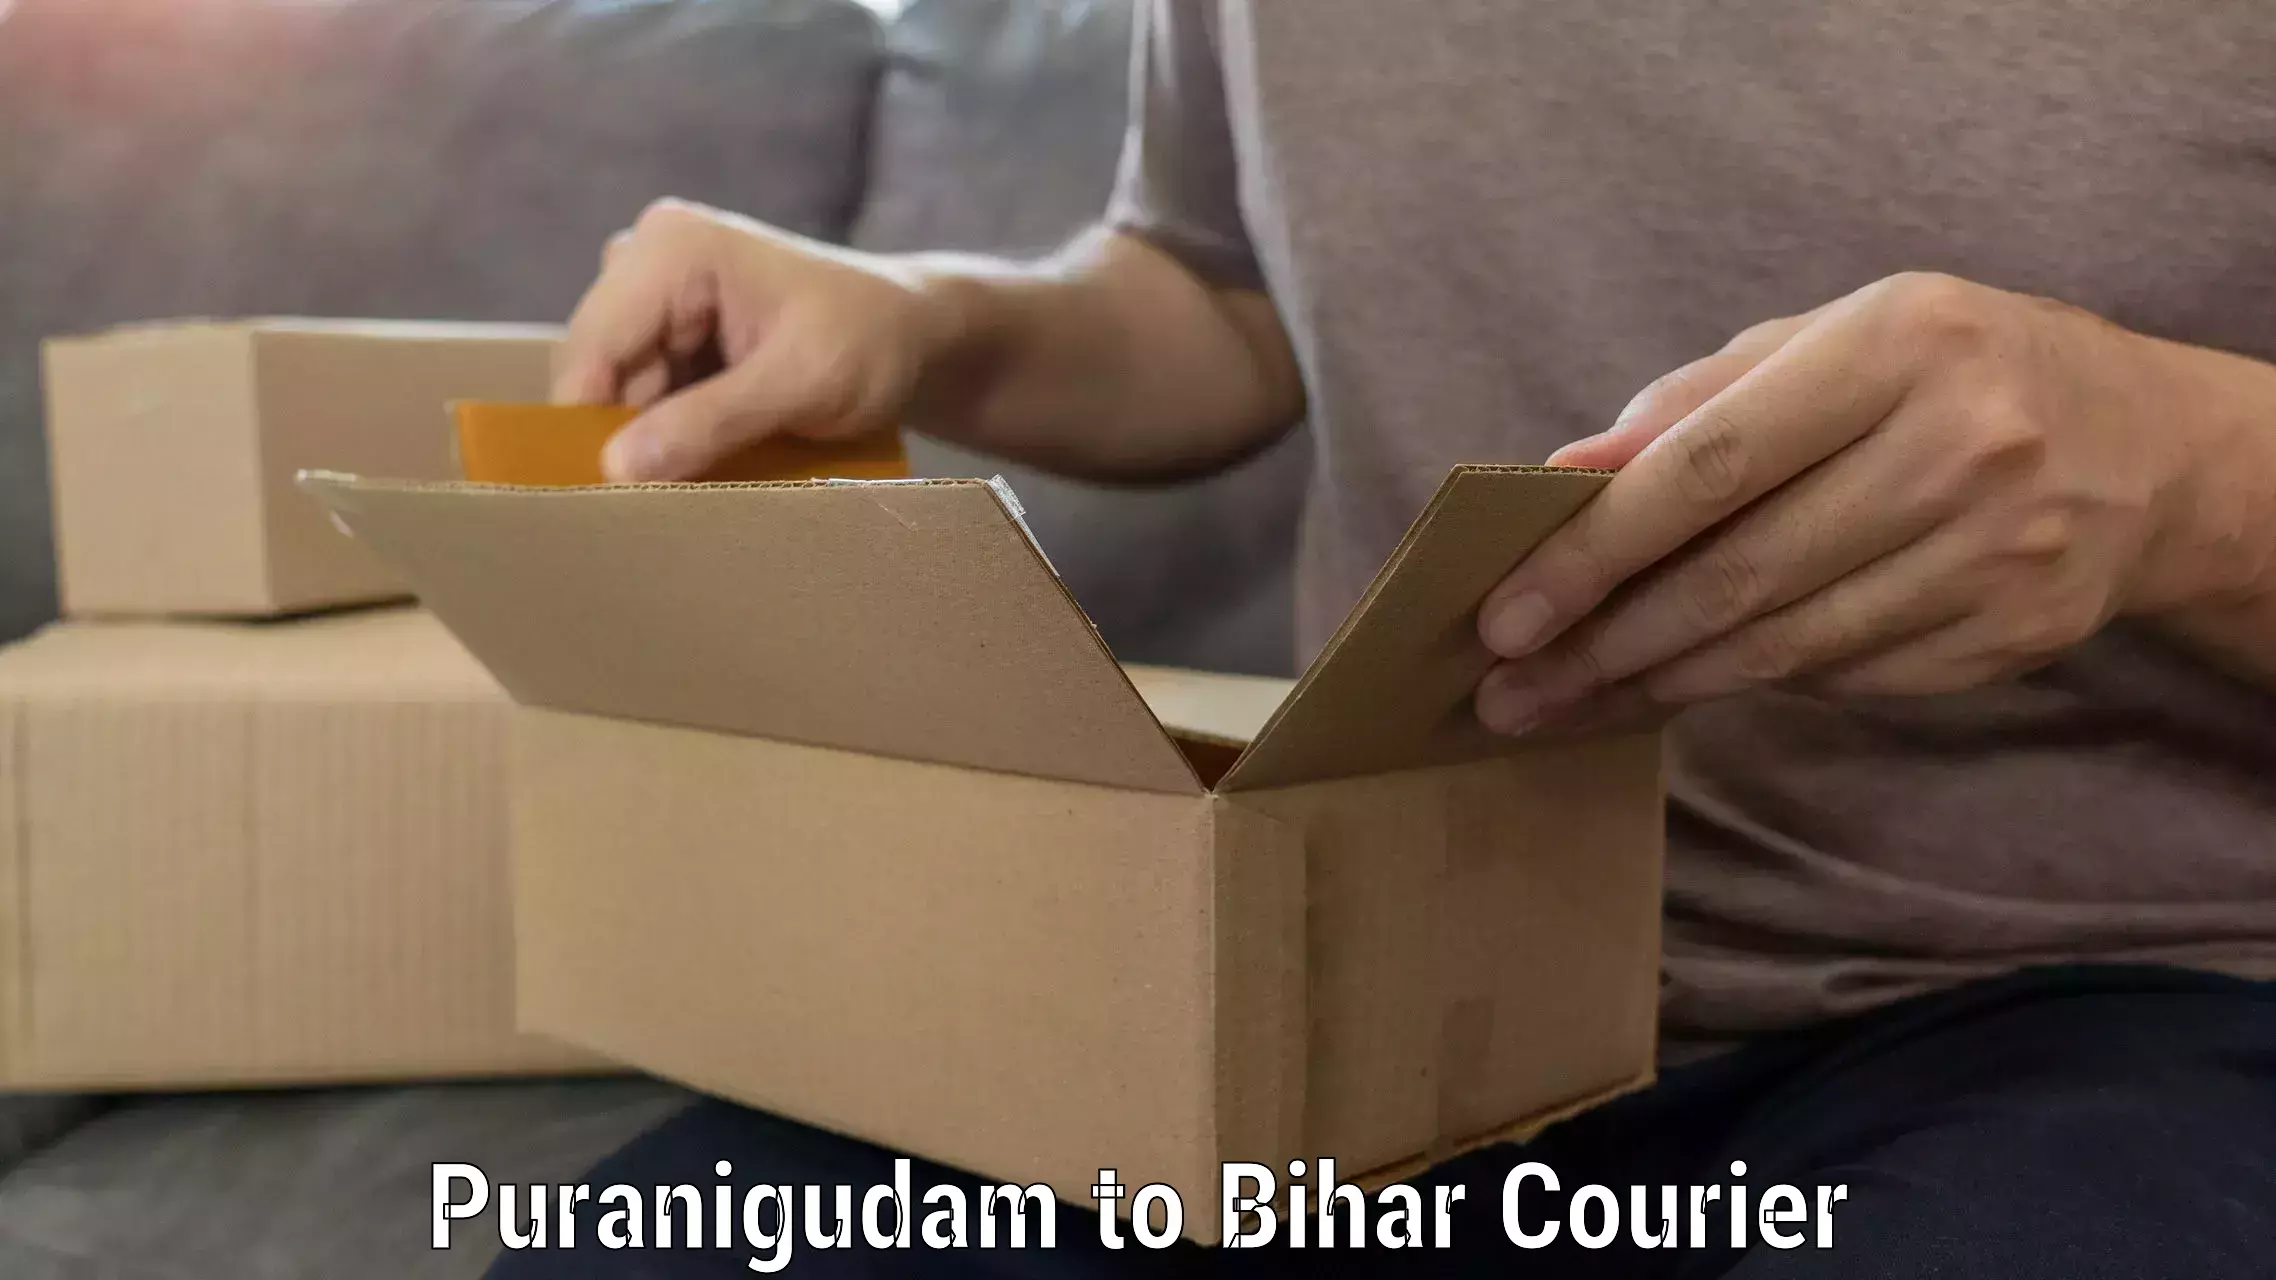 Furniture delivery service Puranigudam to Madhubani